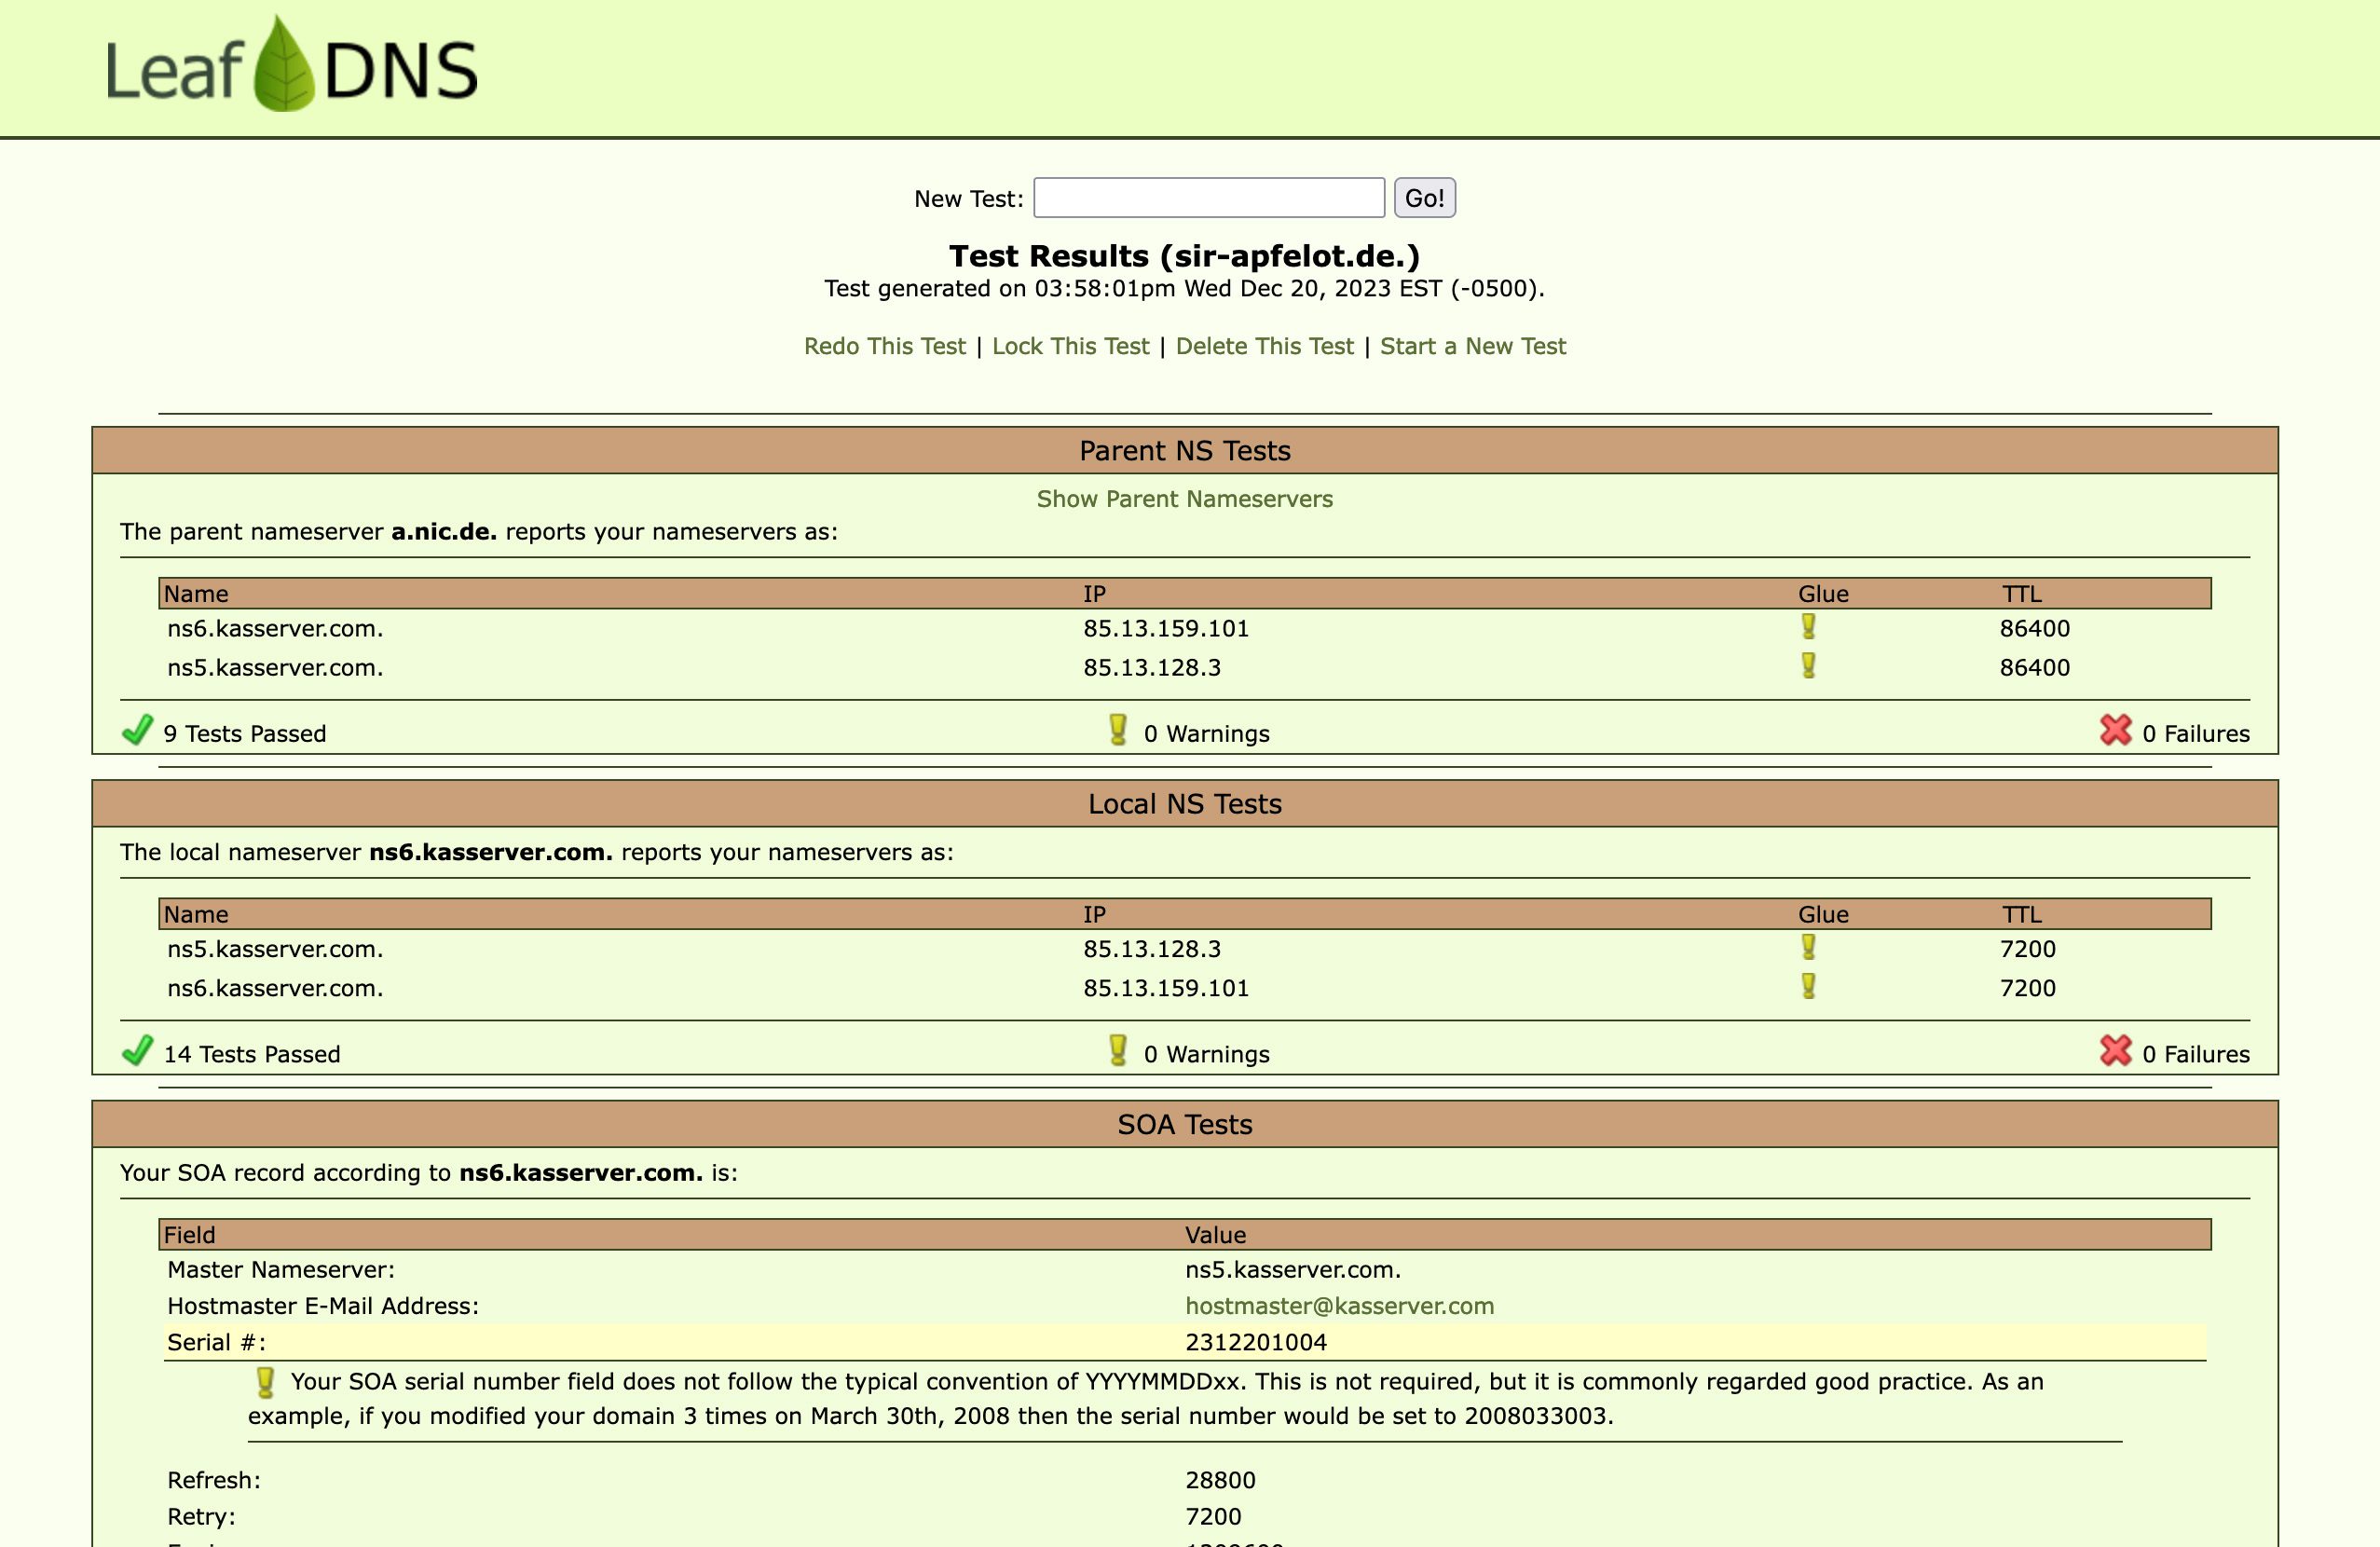 Hier sieht man die Ausgabe des Tools LeafDNS, wenn man sir-apfelot.de als Testdomain einträgt.